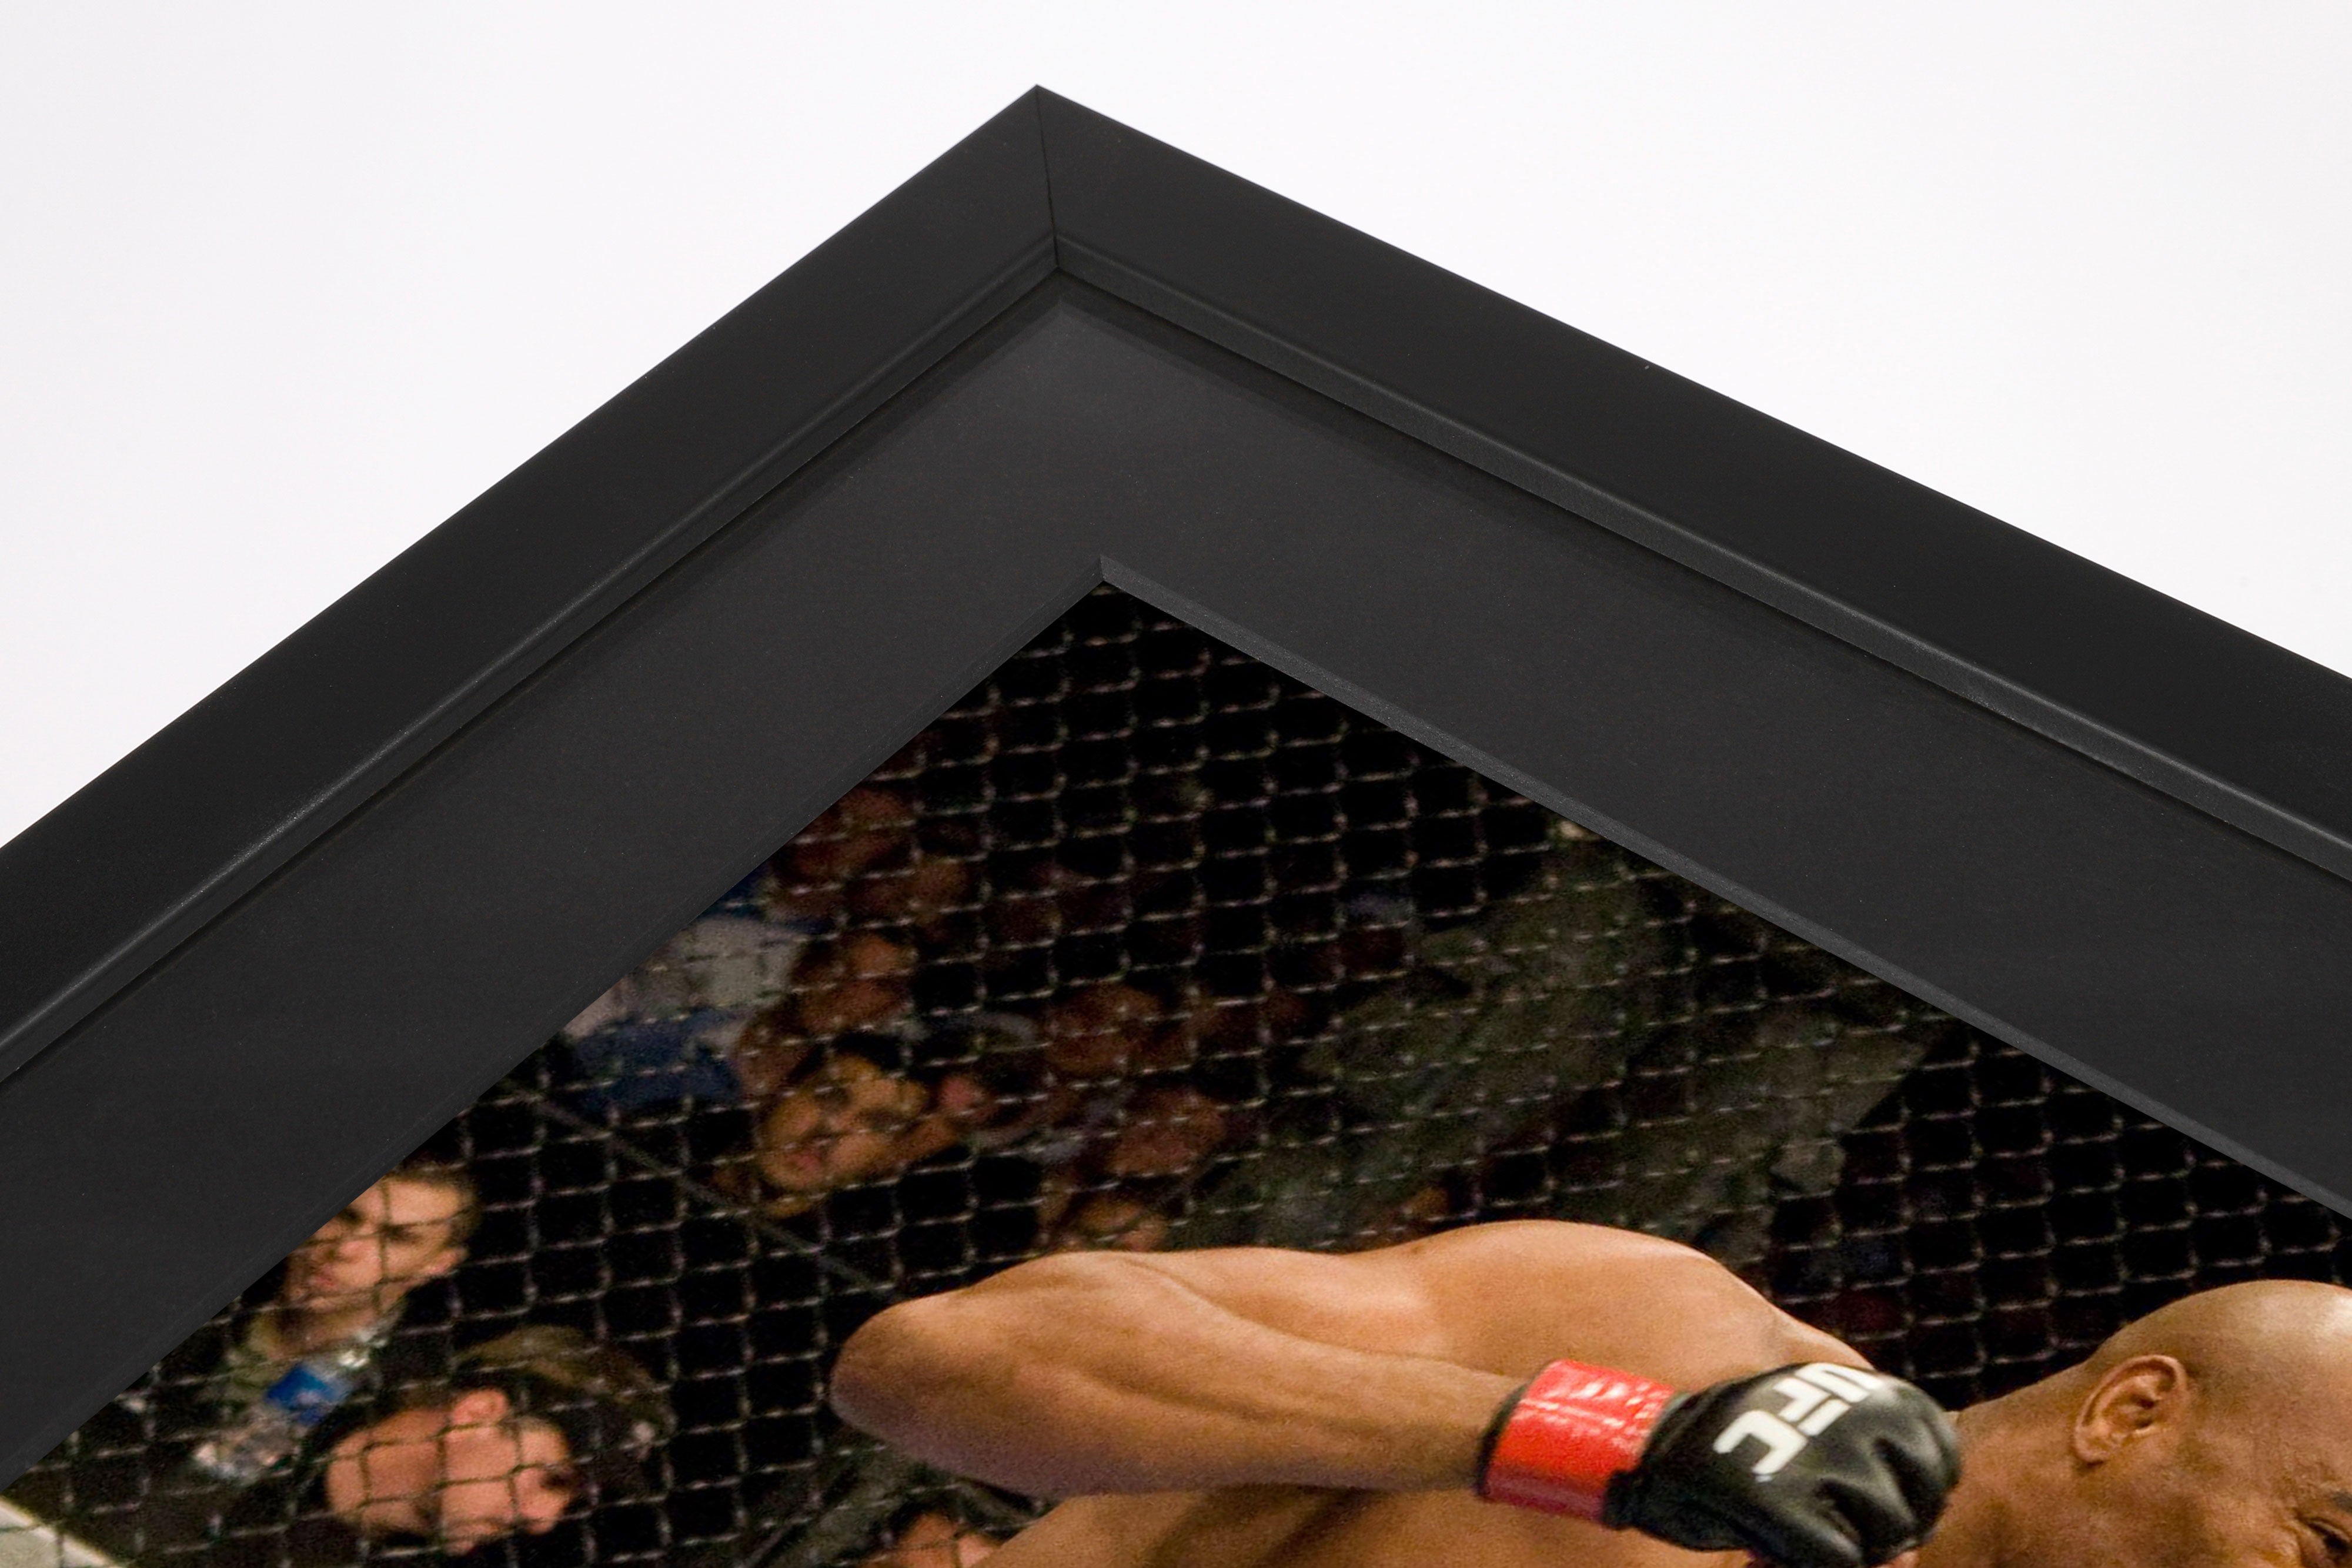 Anderson Silva Framed Print – UFC 101